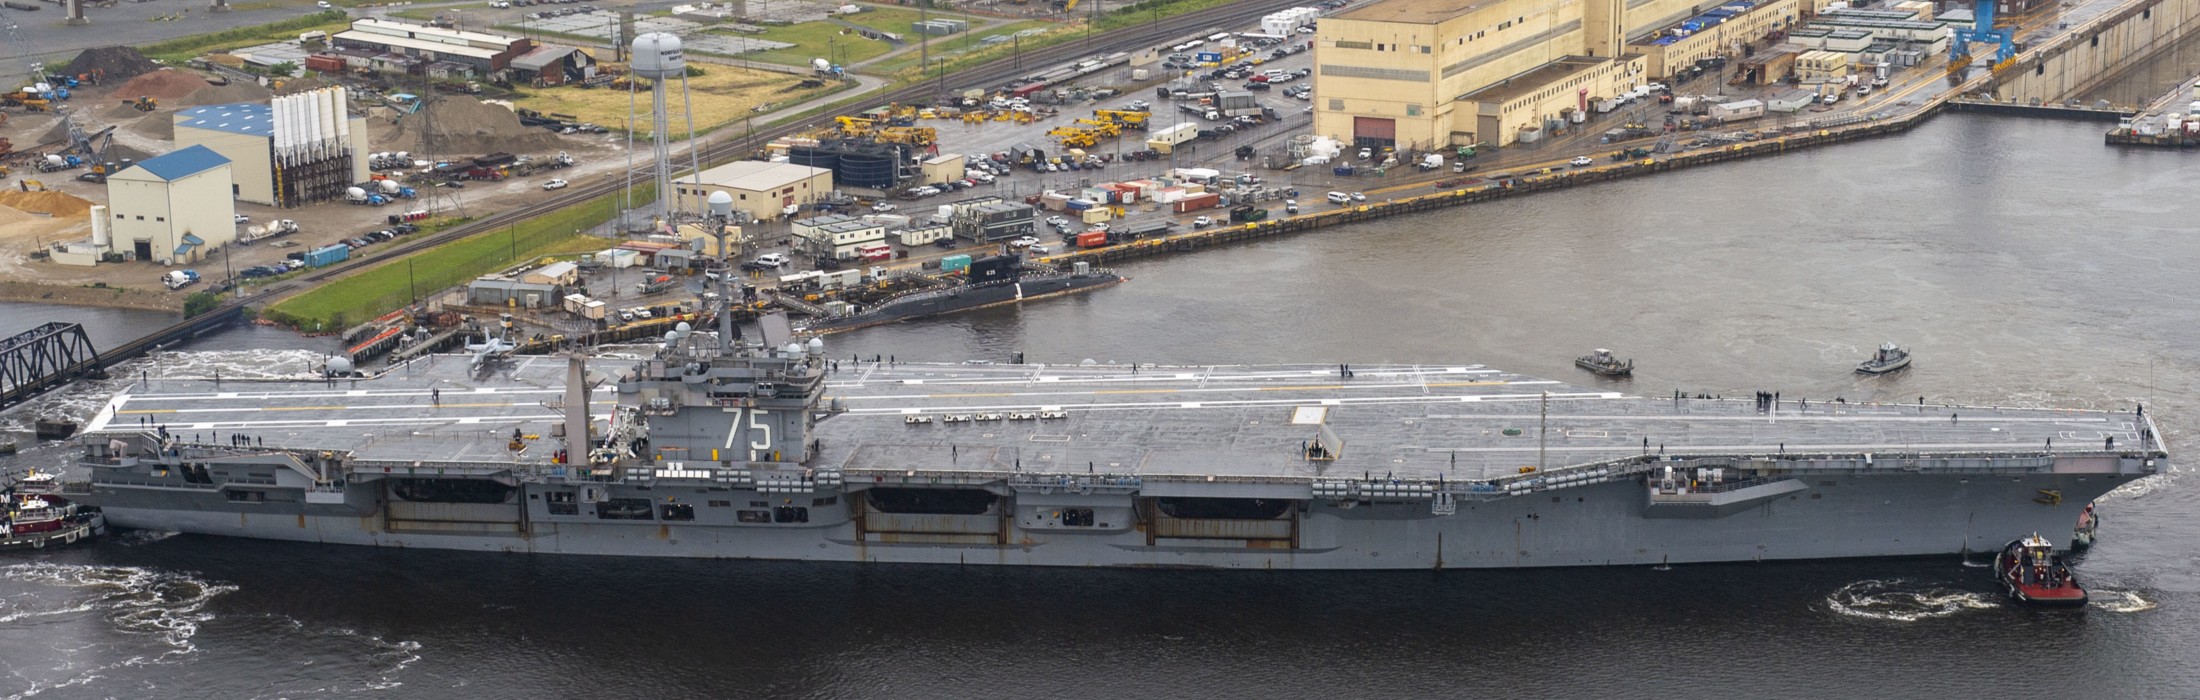 cvn-75 uss harry s. truman nimitz class aircraft carrier ecia norfolk naval shipyard 88